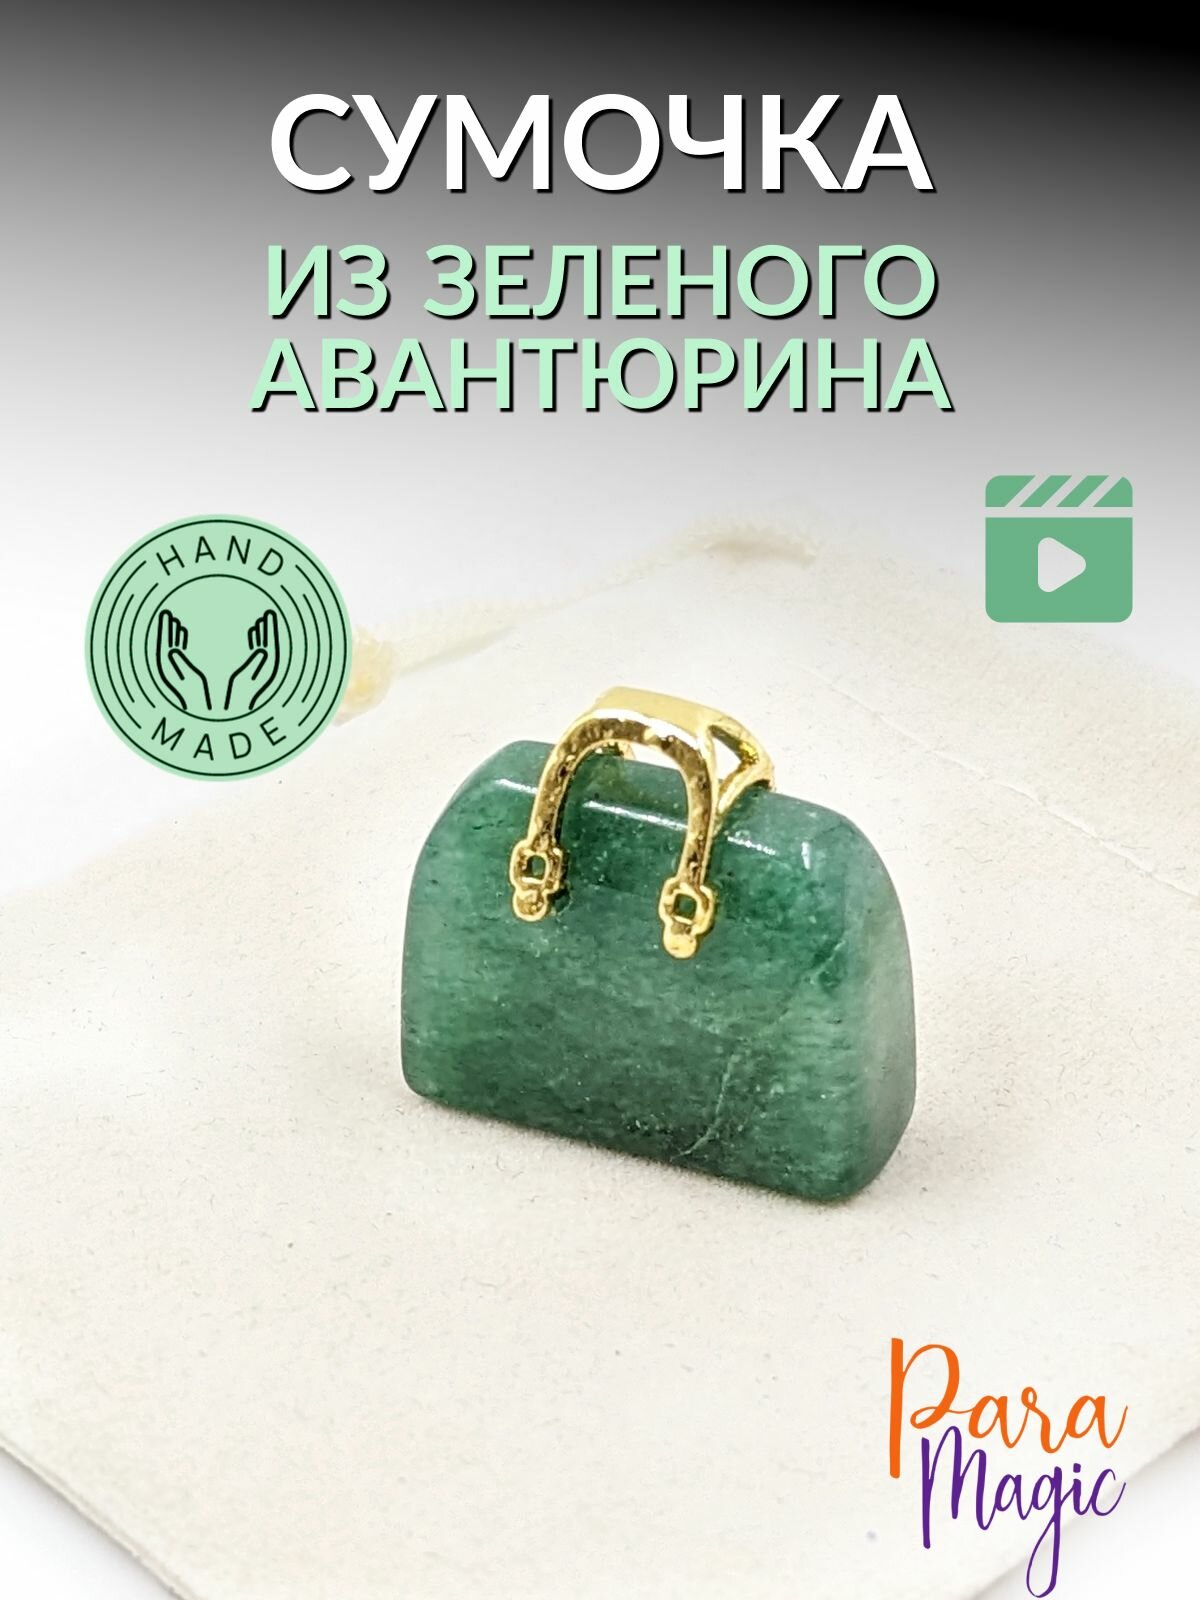 Авантюрин зеленый, сумочка, натуральный камень, размер 2х2,5см.